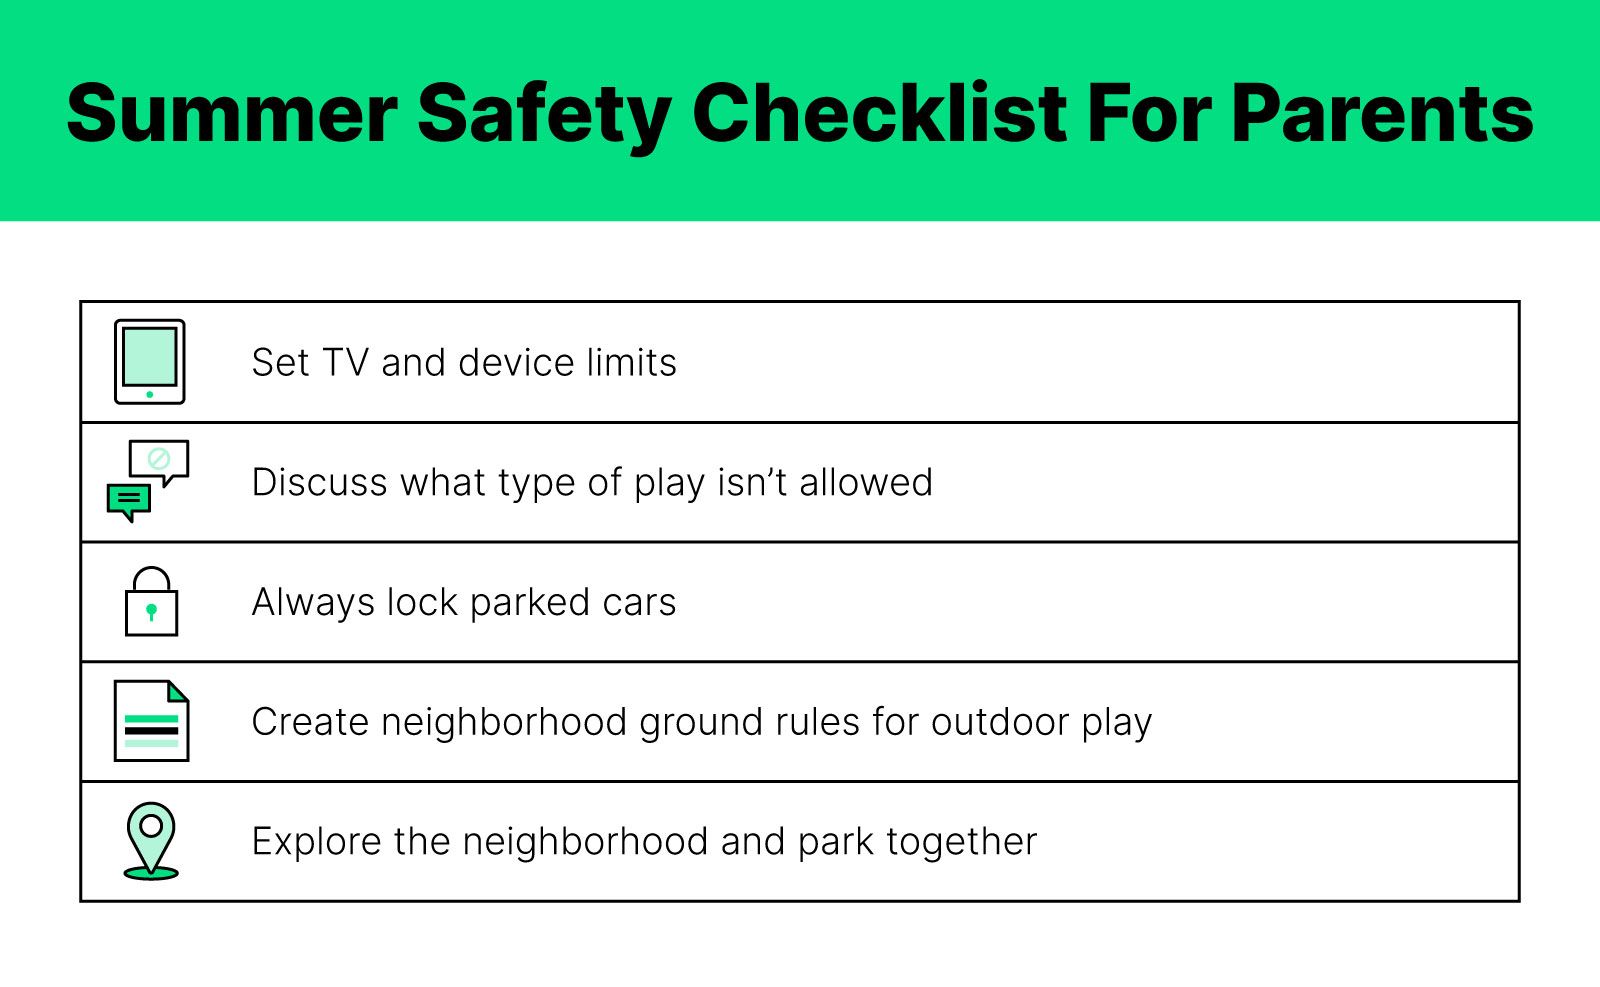 Summer safety checklist for parents.